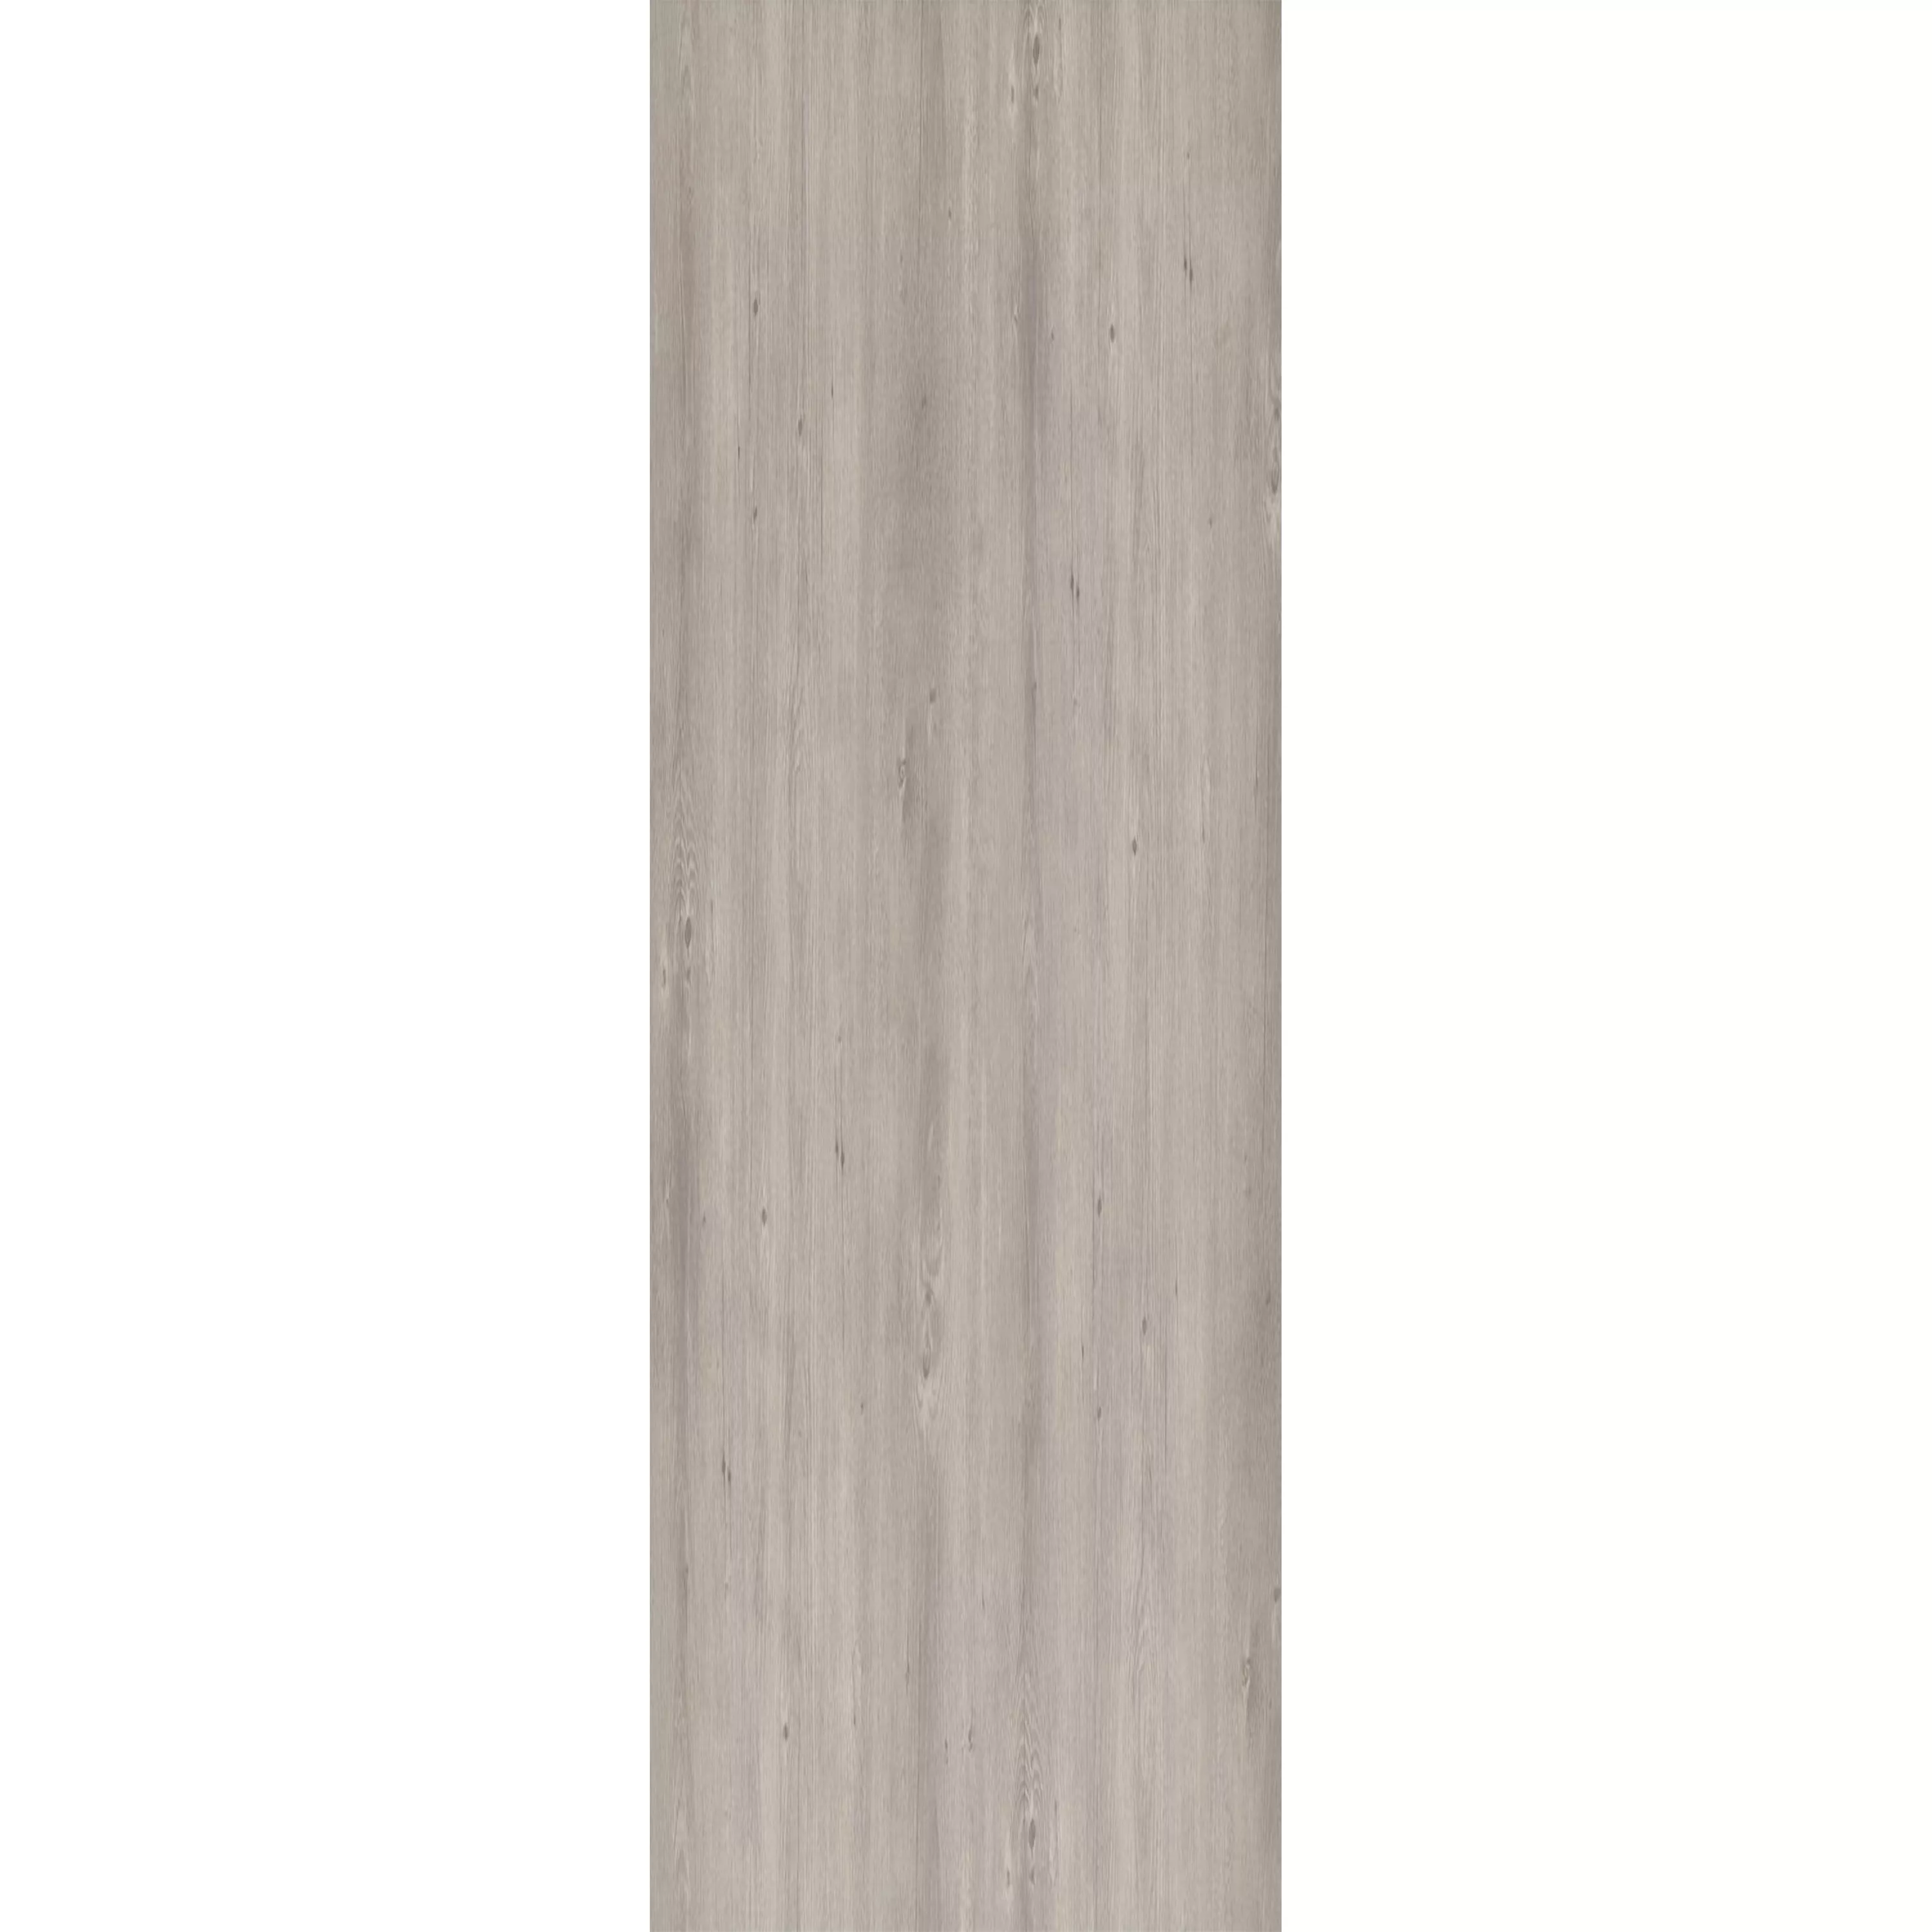 Vinylboden Klicksystem Greywood Grau 17,2x121cm